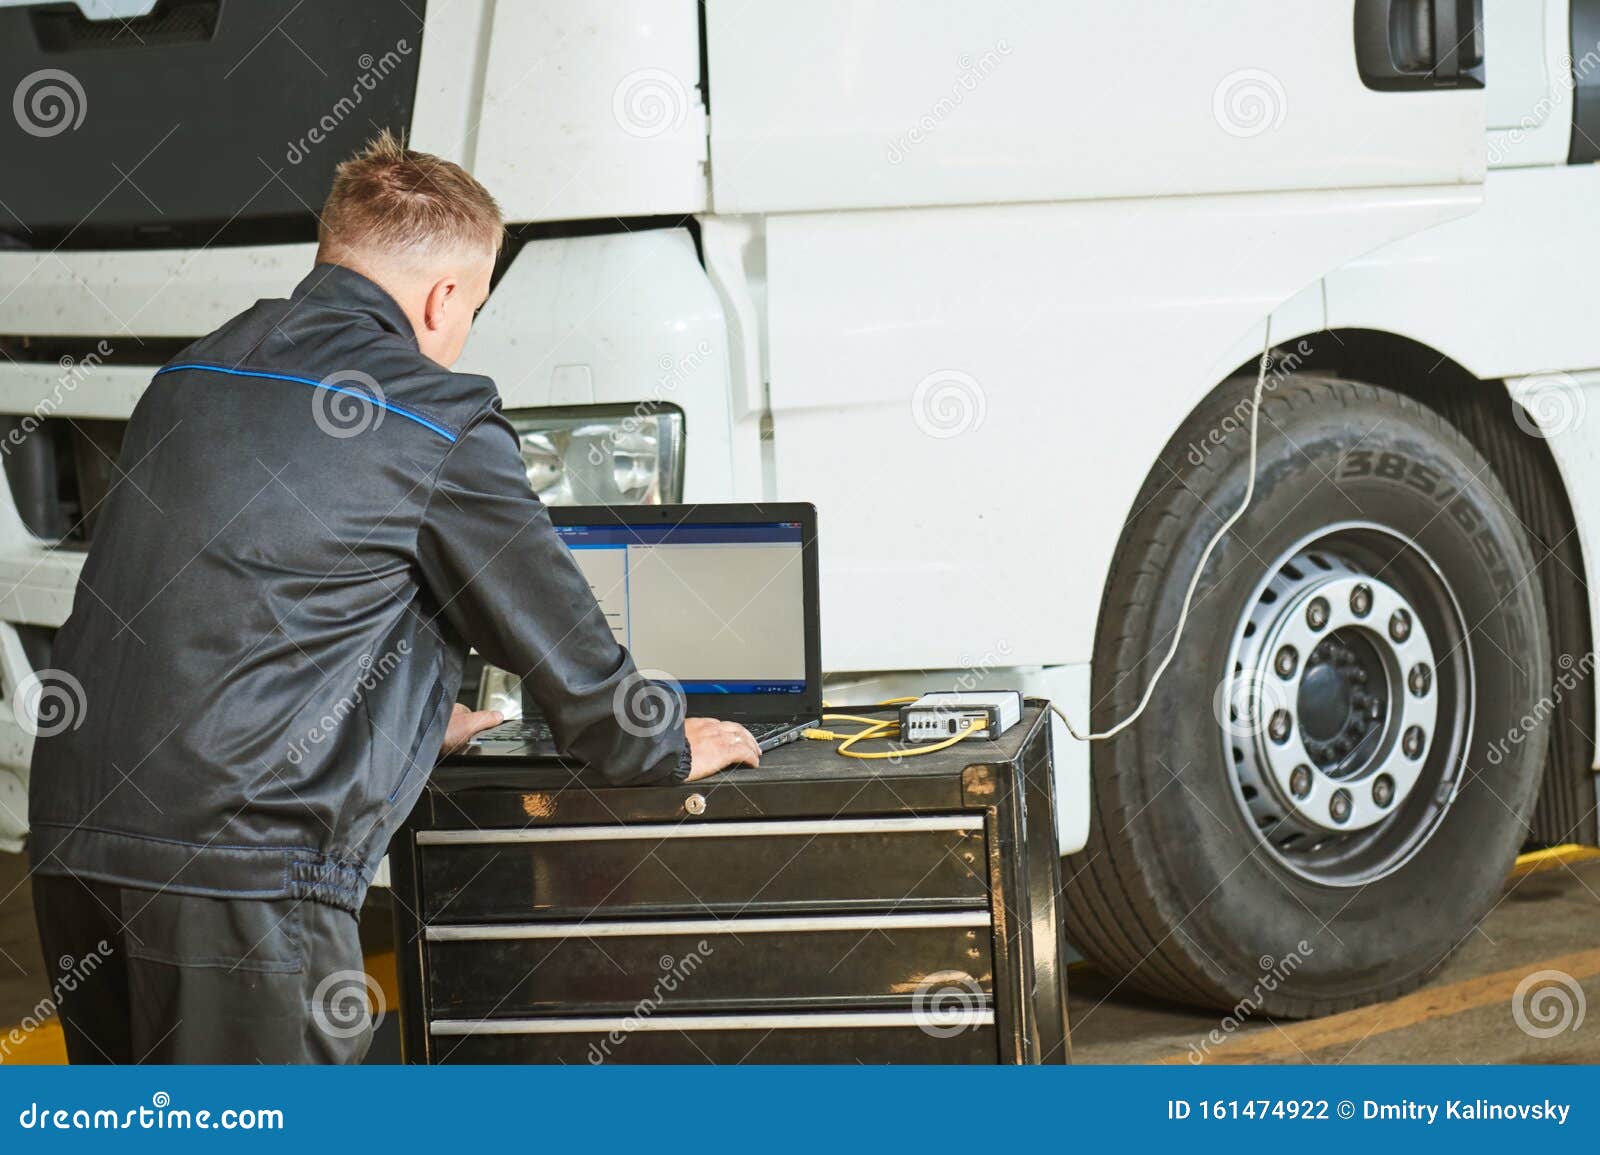 truck repair service. mechanic makes computer diagnostic of the semitruck